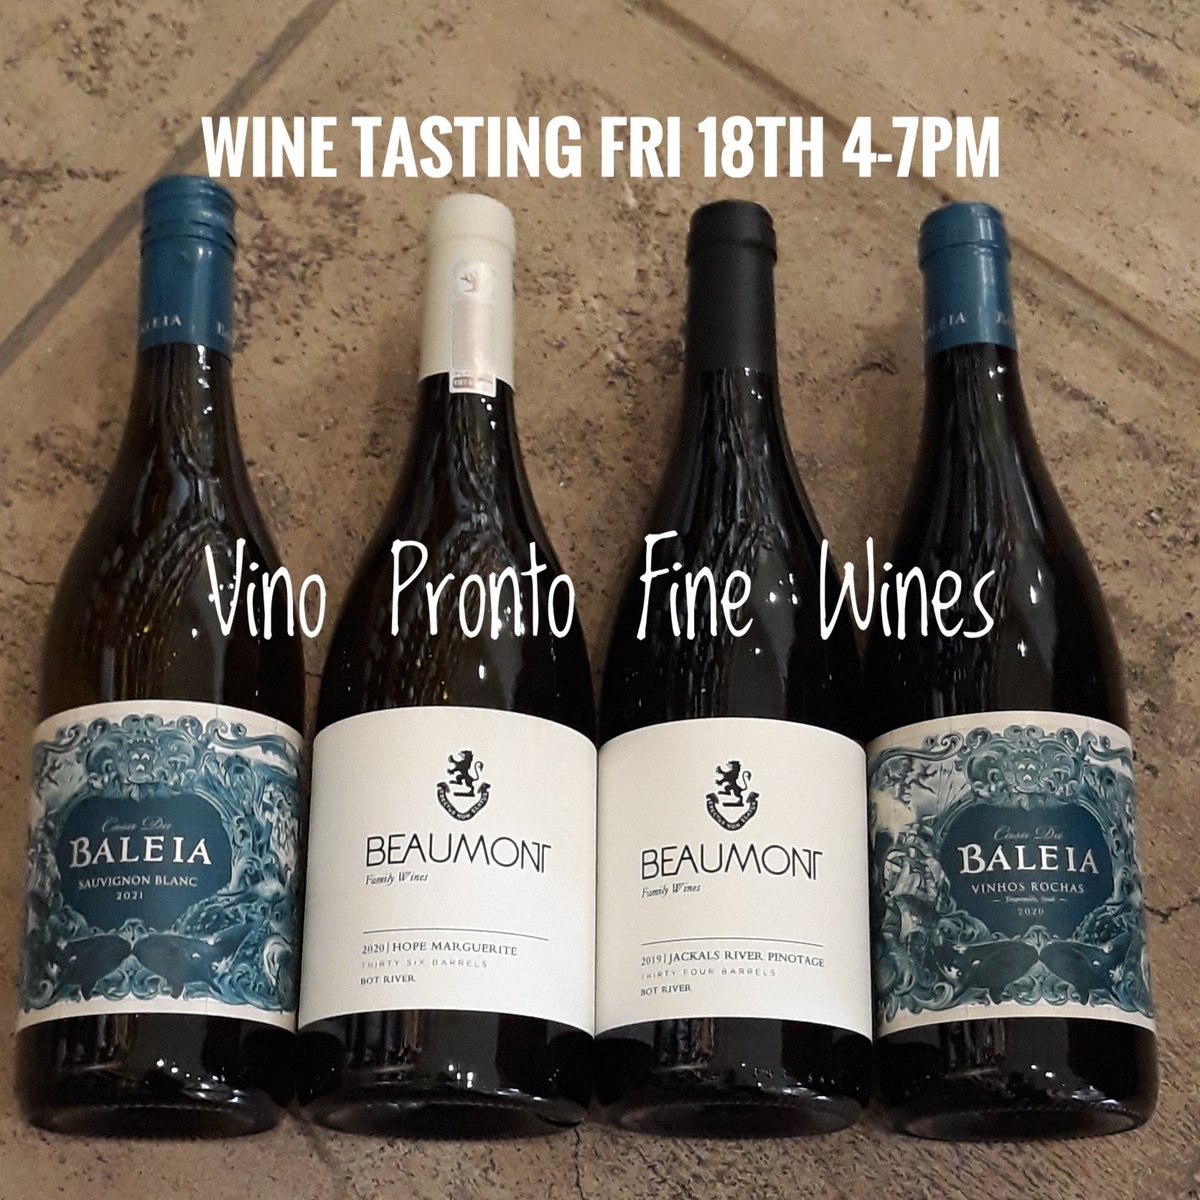 #winetasting today 4-7pm 

#vinoprontofinewines #capewines